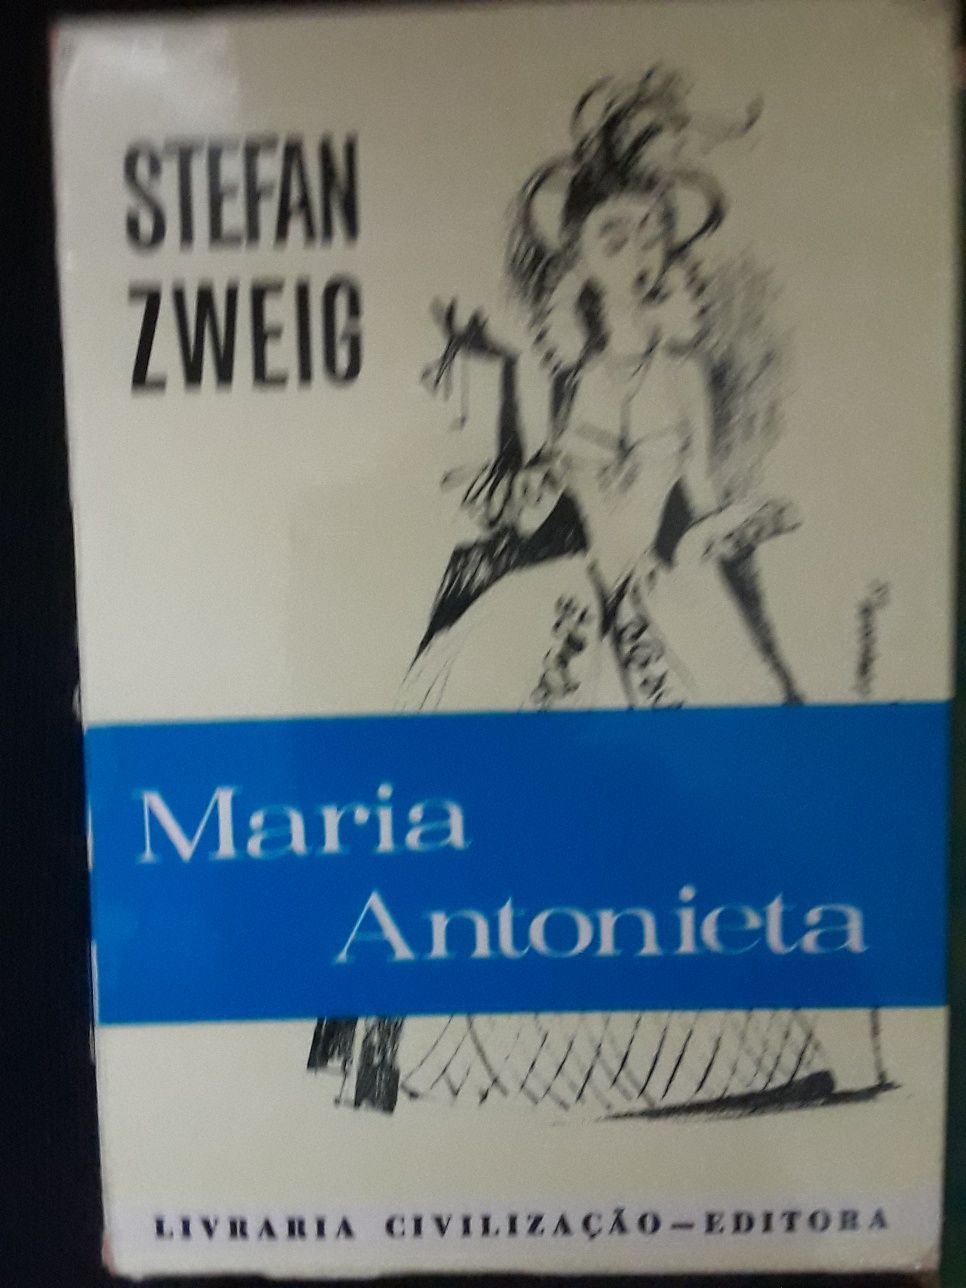 Stefan Zweig Maria Antonieta Vinte e quatro horas